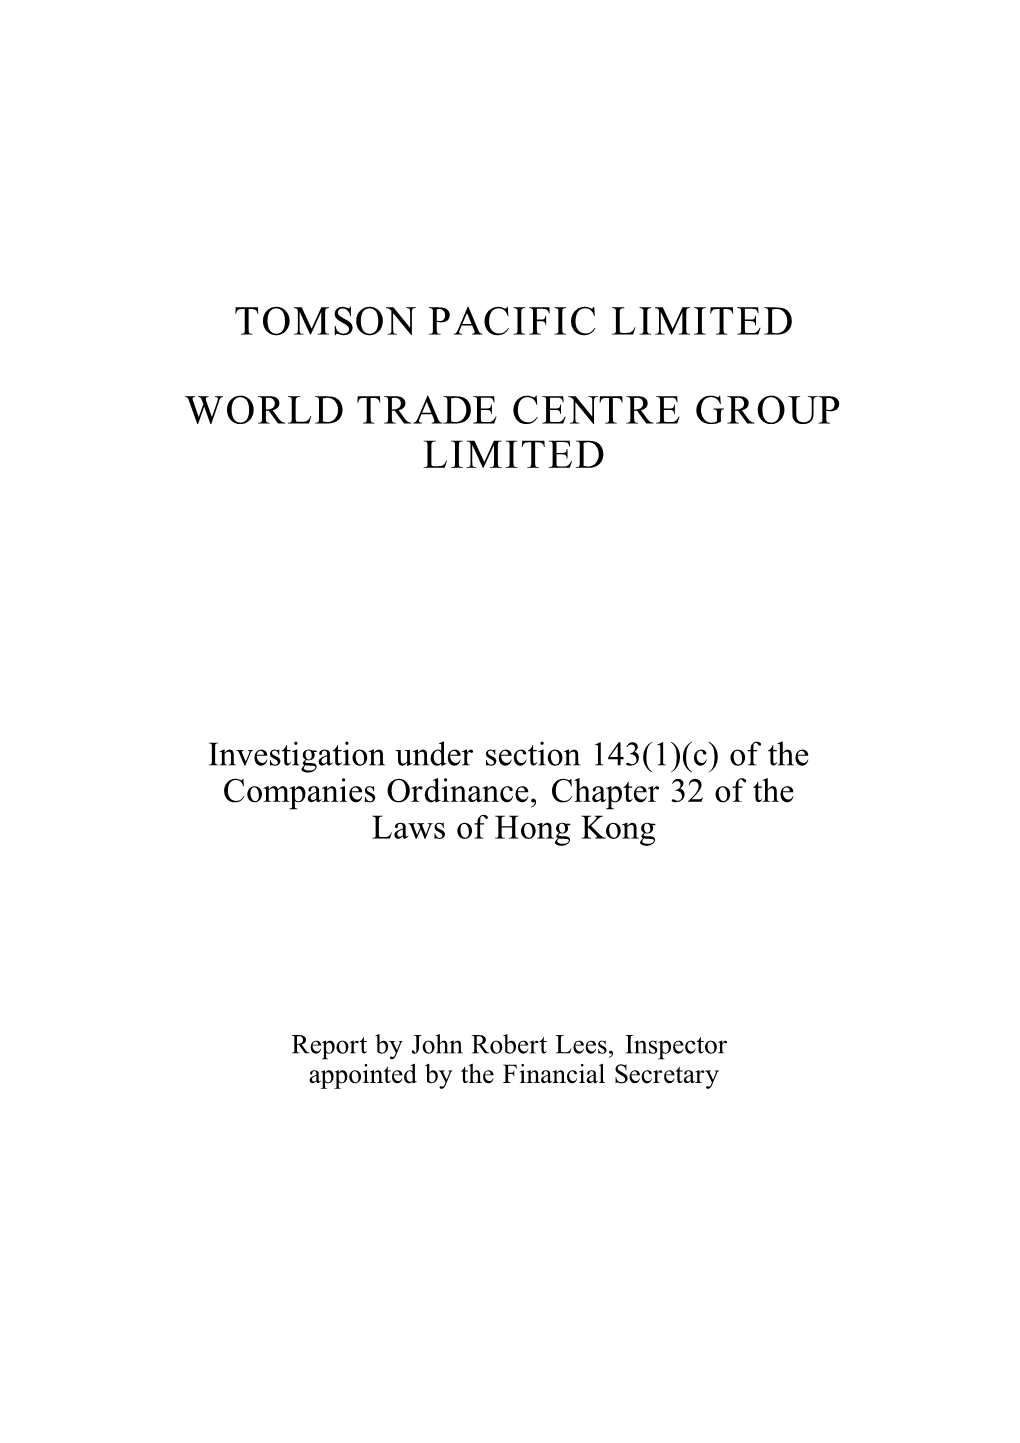 WTCG / Tomson Pacific Report